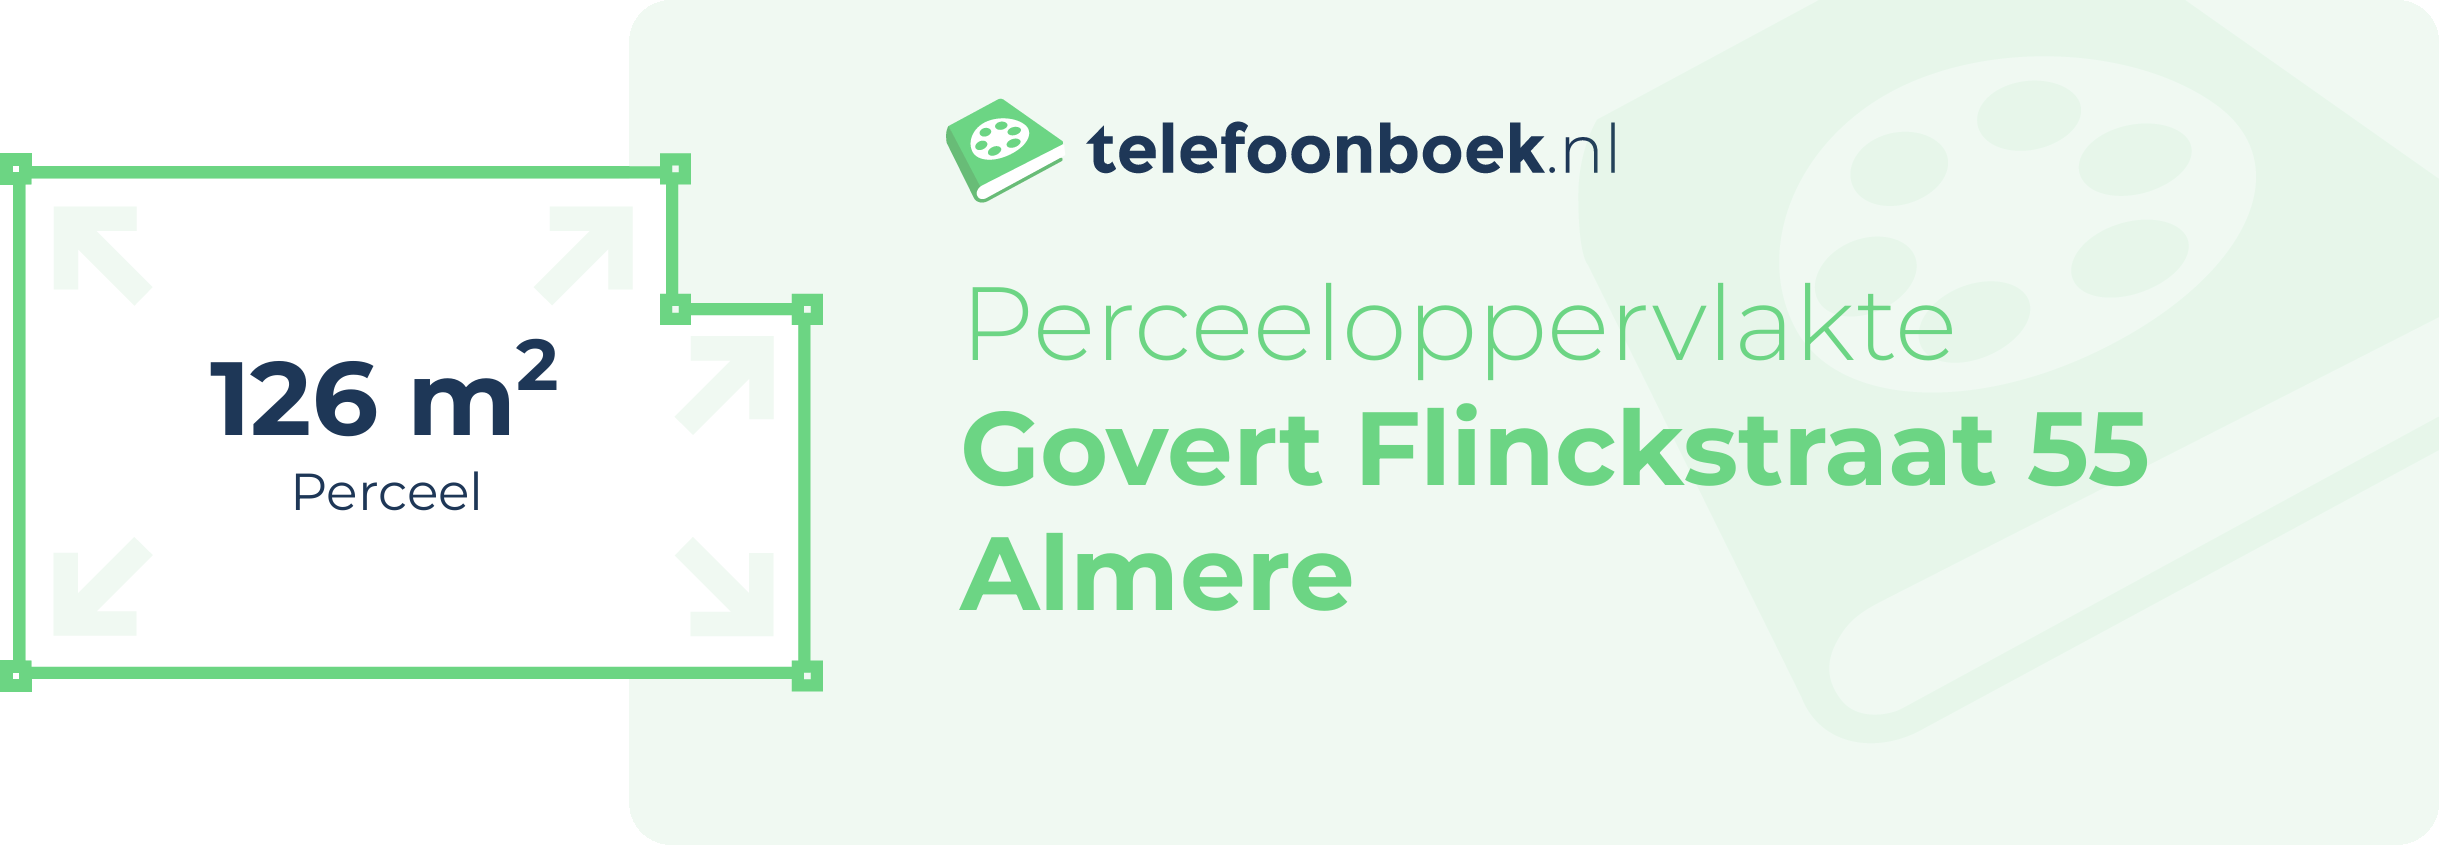 Perceeloppervlakte Govert Flinckstraat 55 Almere